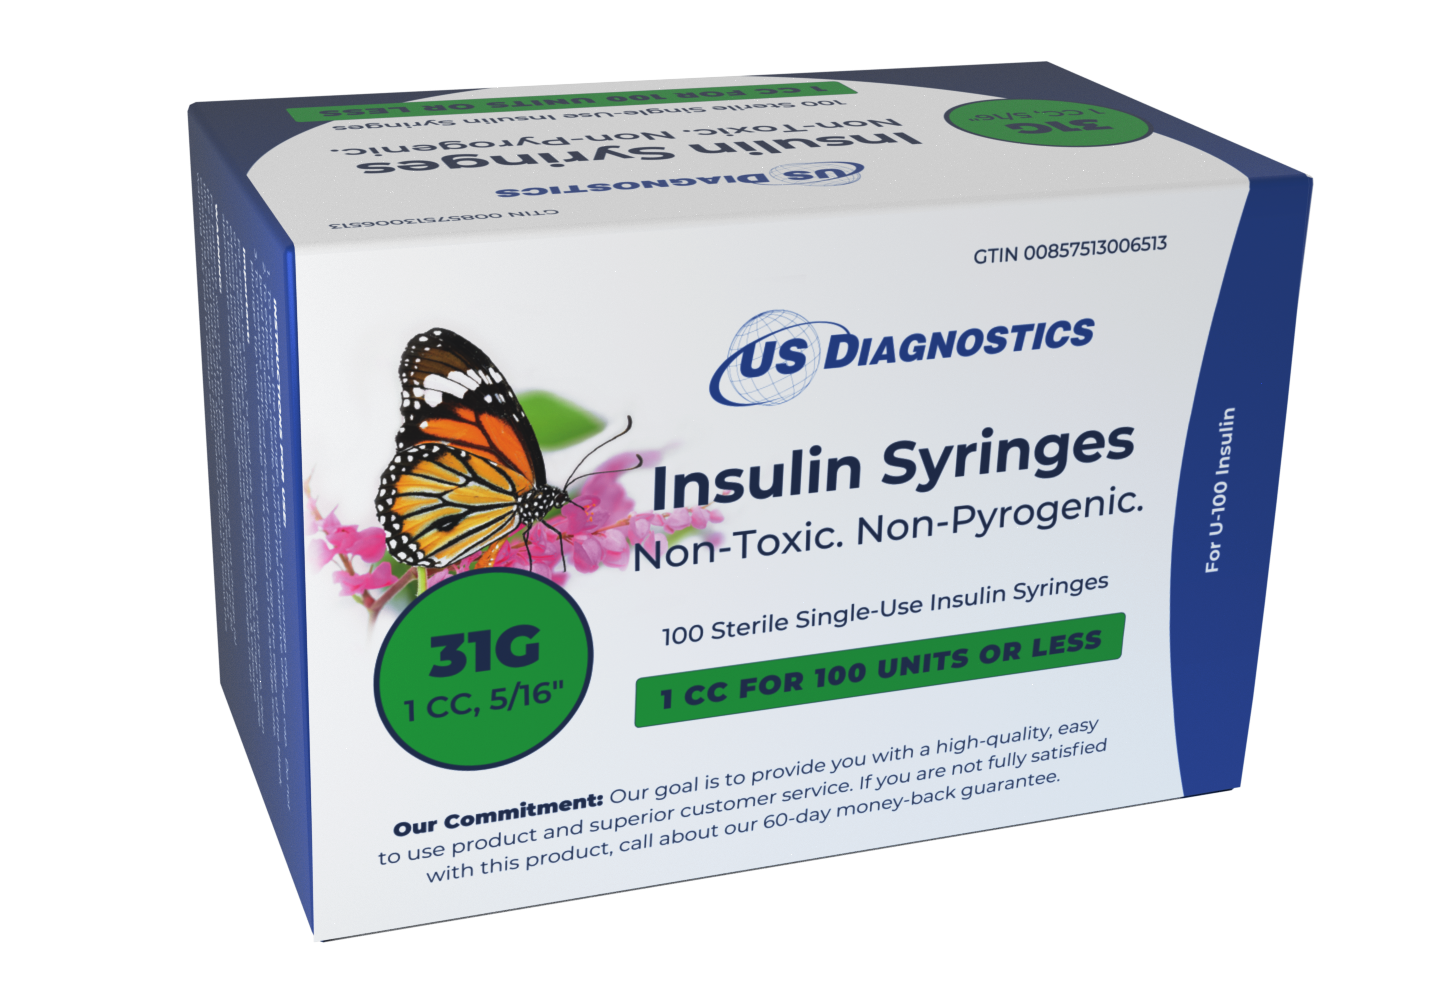 Insulin Syringes 31G, 1cc, 5/16", 100/box